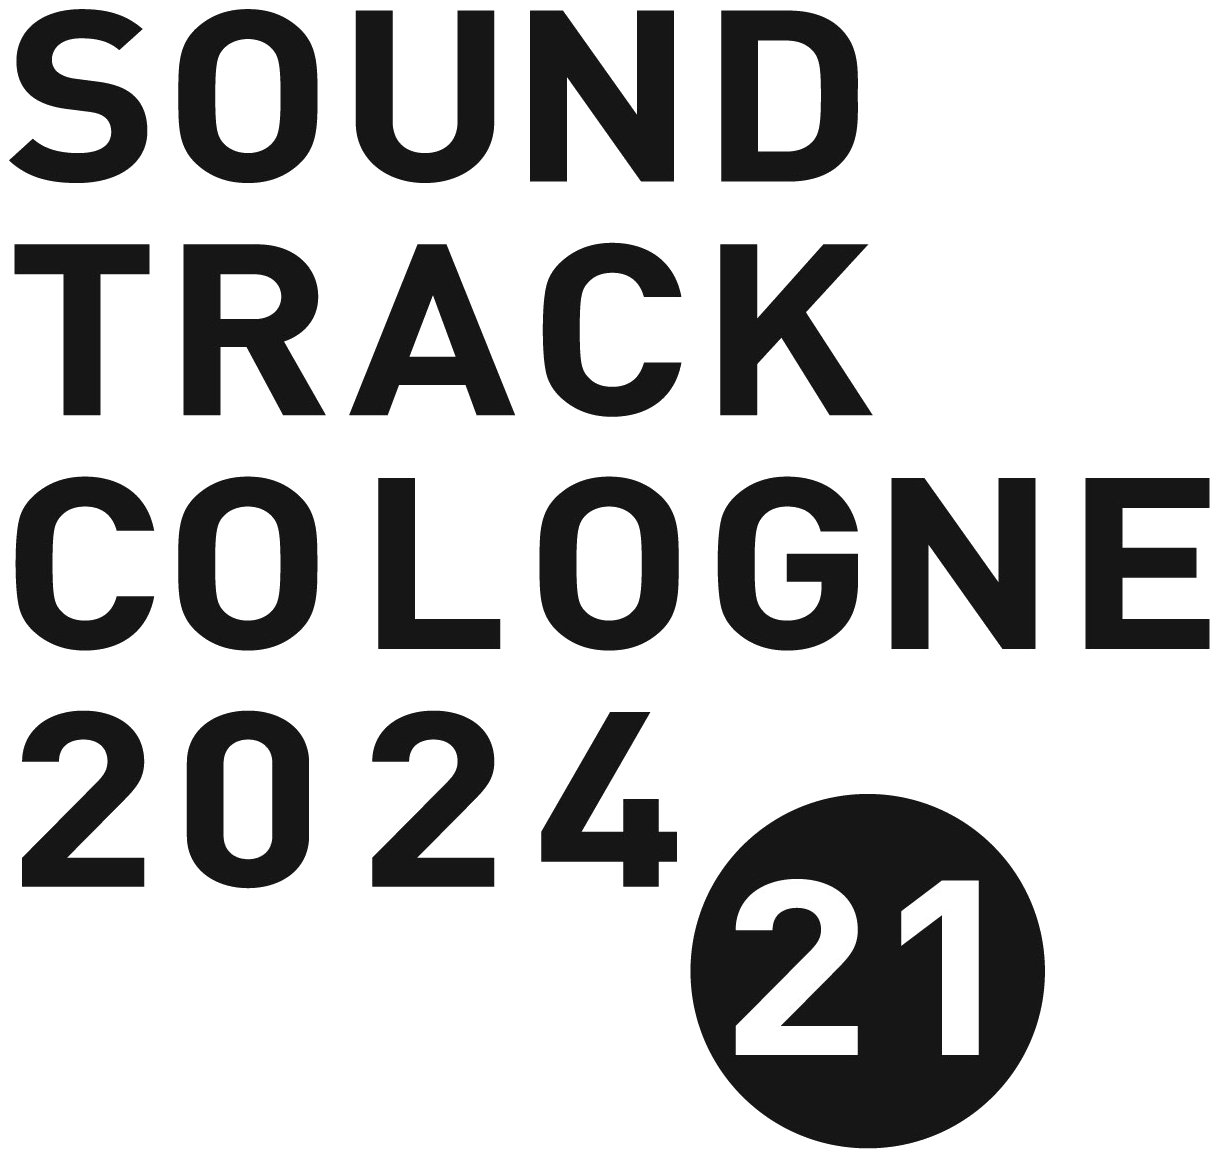 SoundTrack_Cologne 21